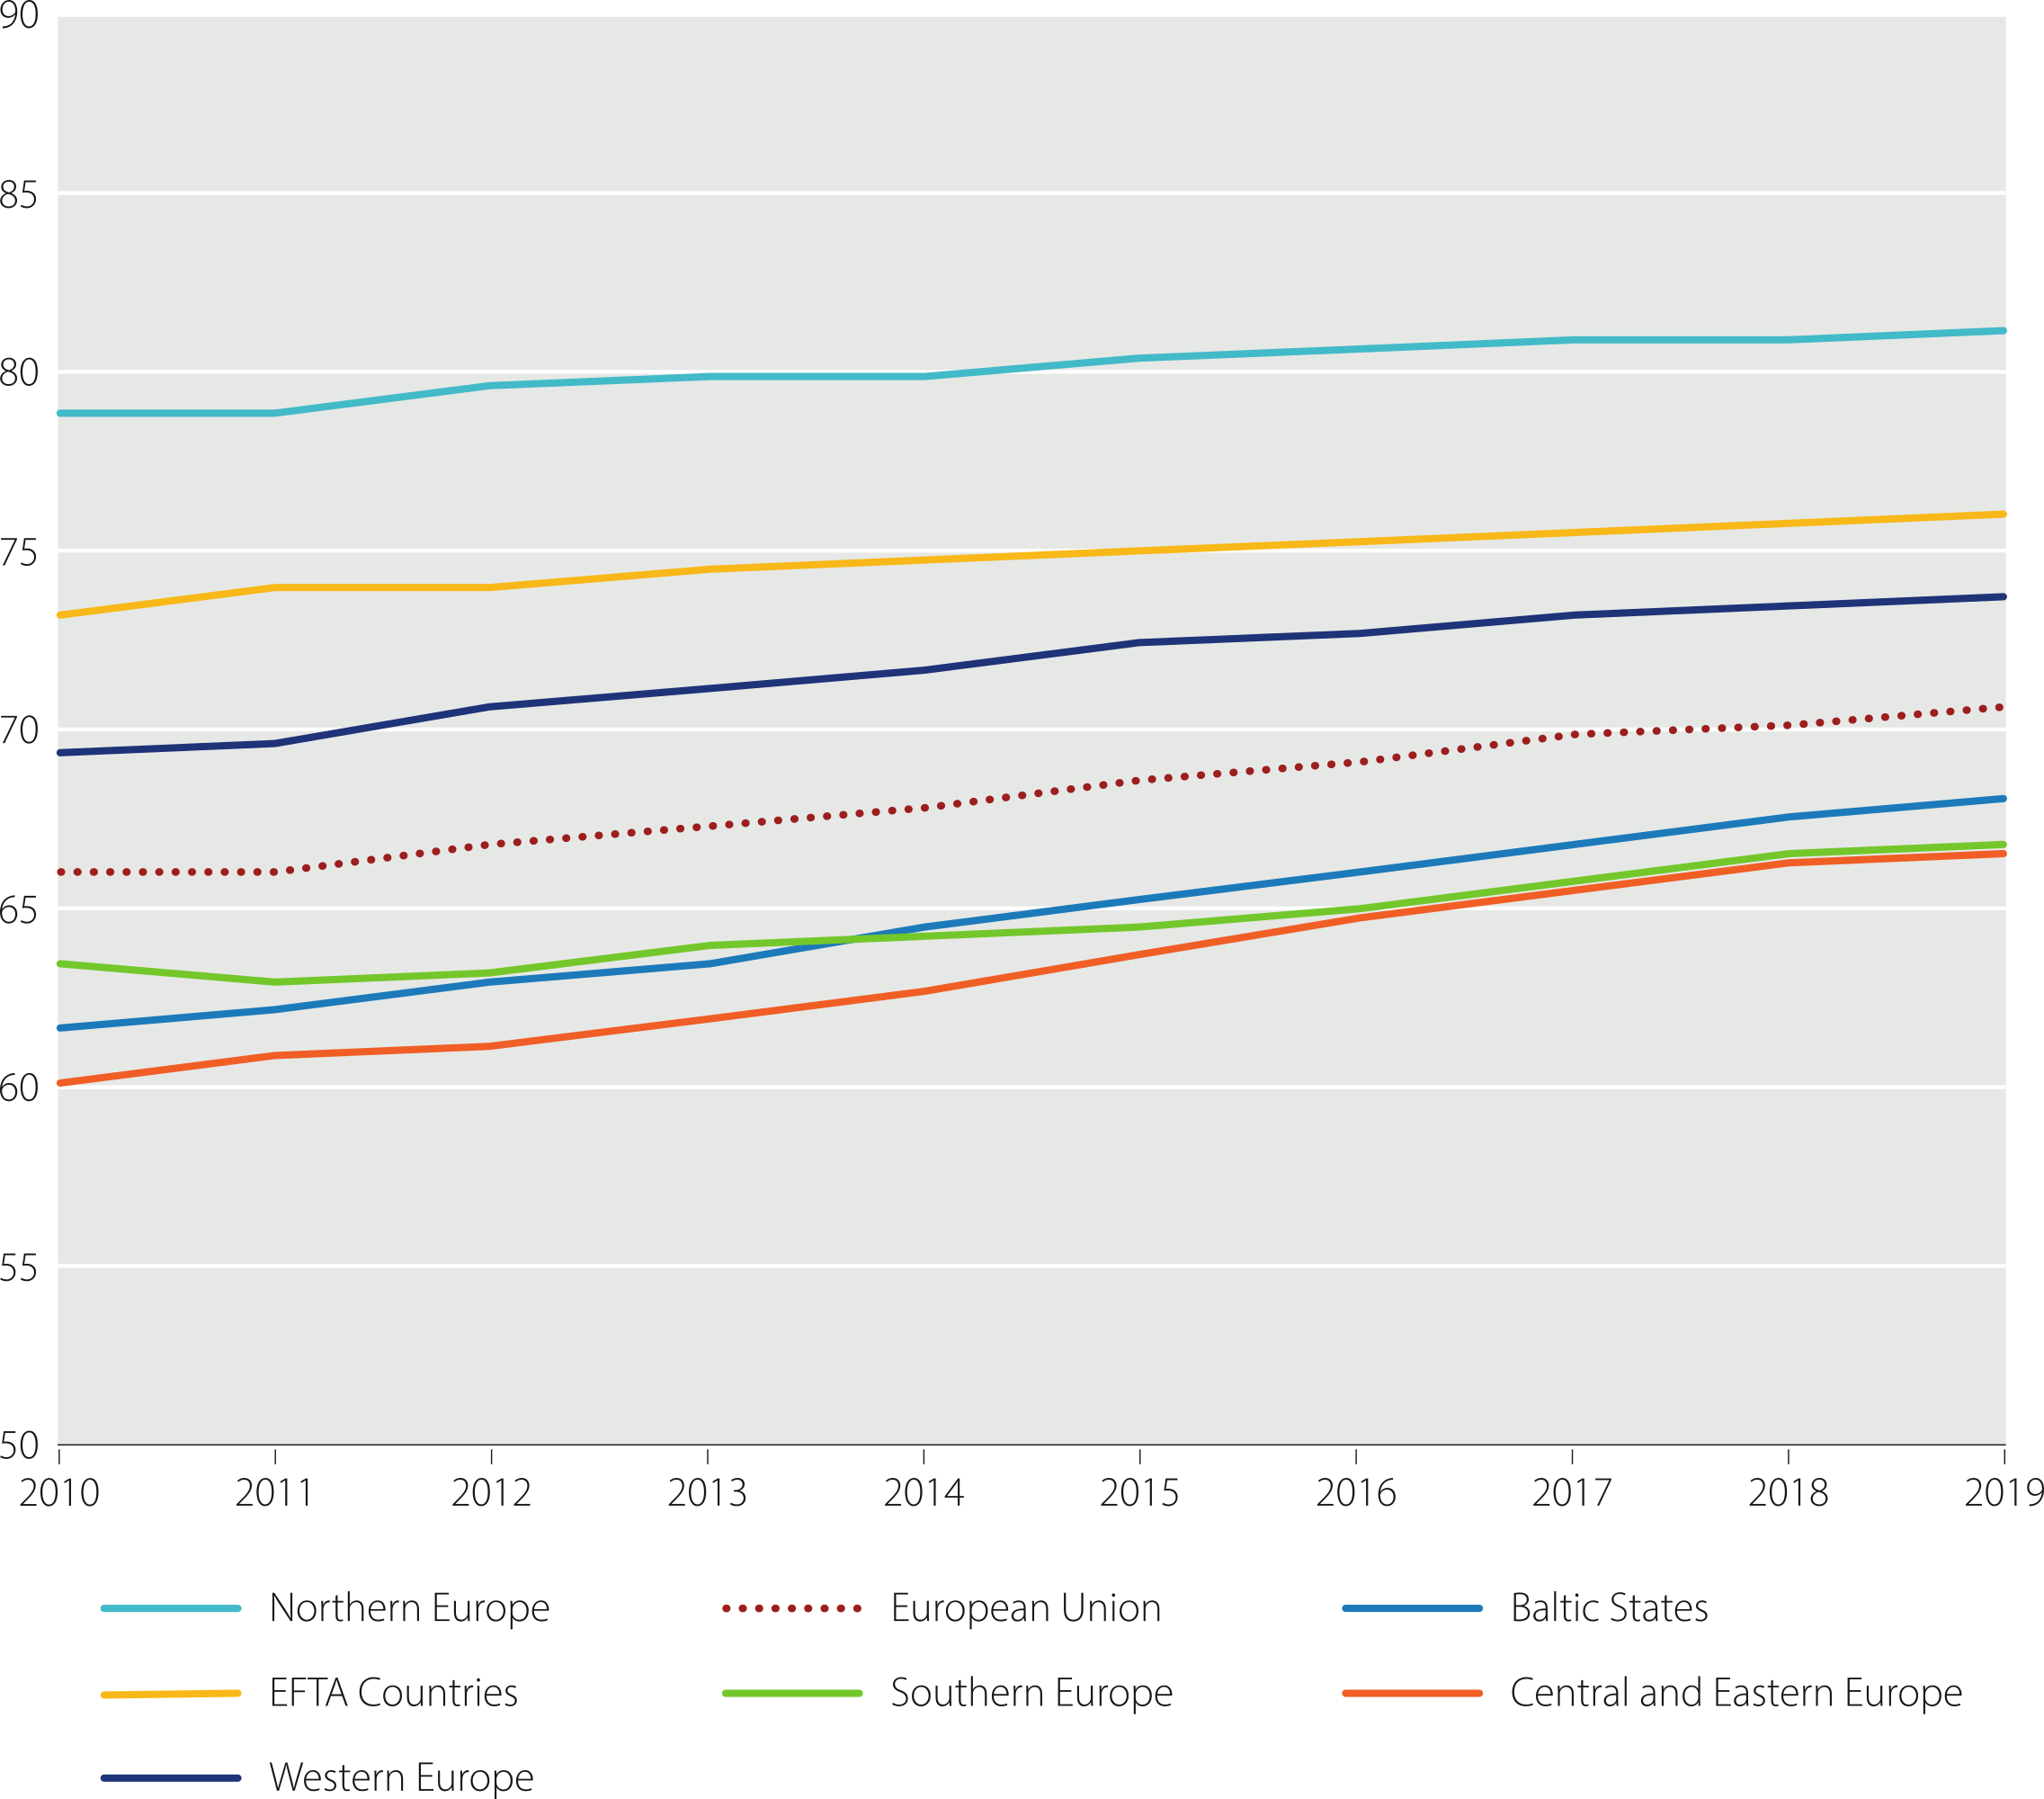 Progress on the SDG Index by Europe sub-regions (2010-2019)